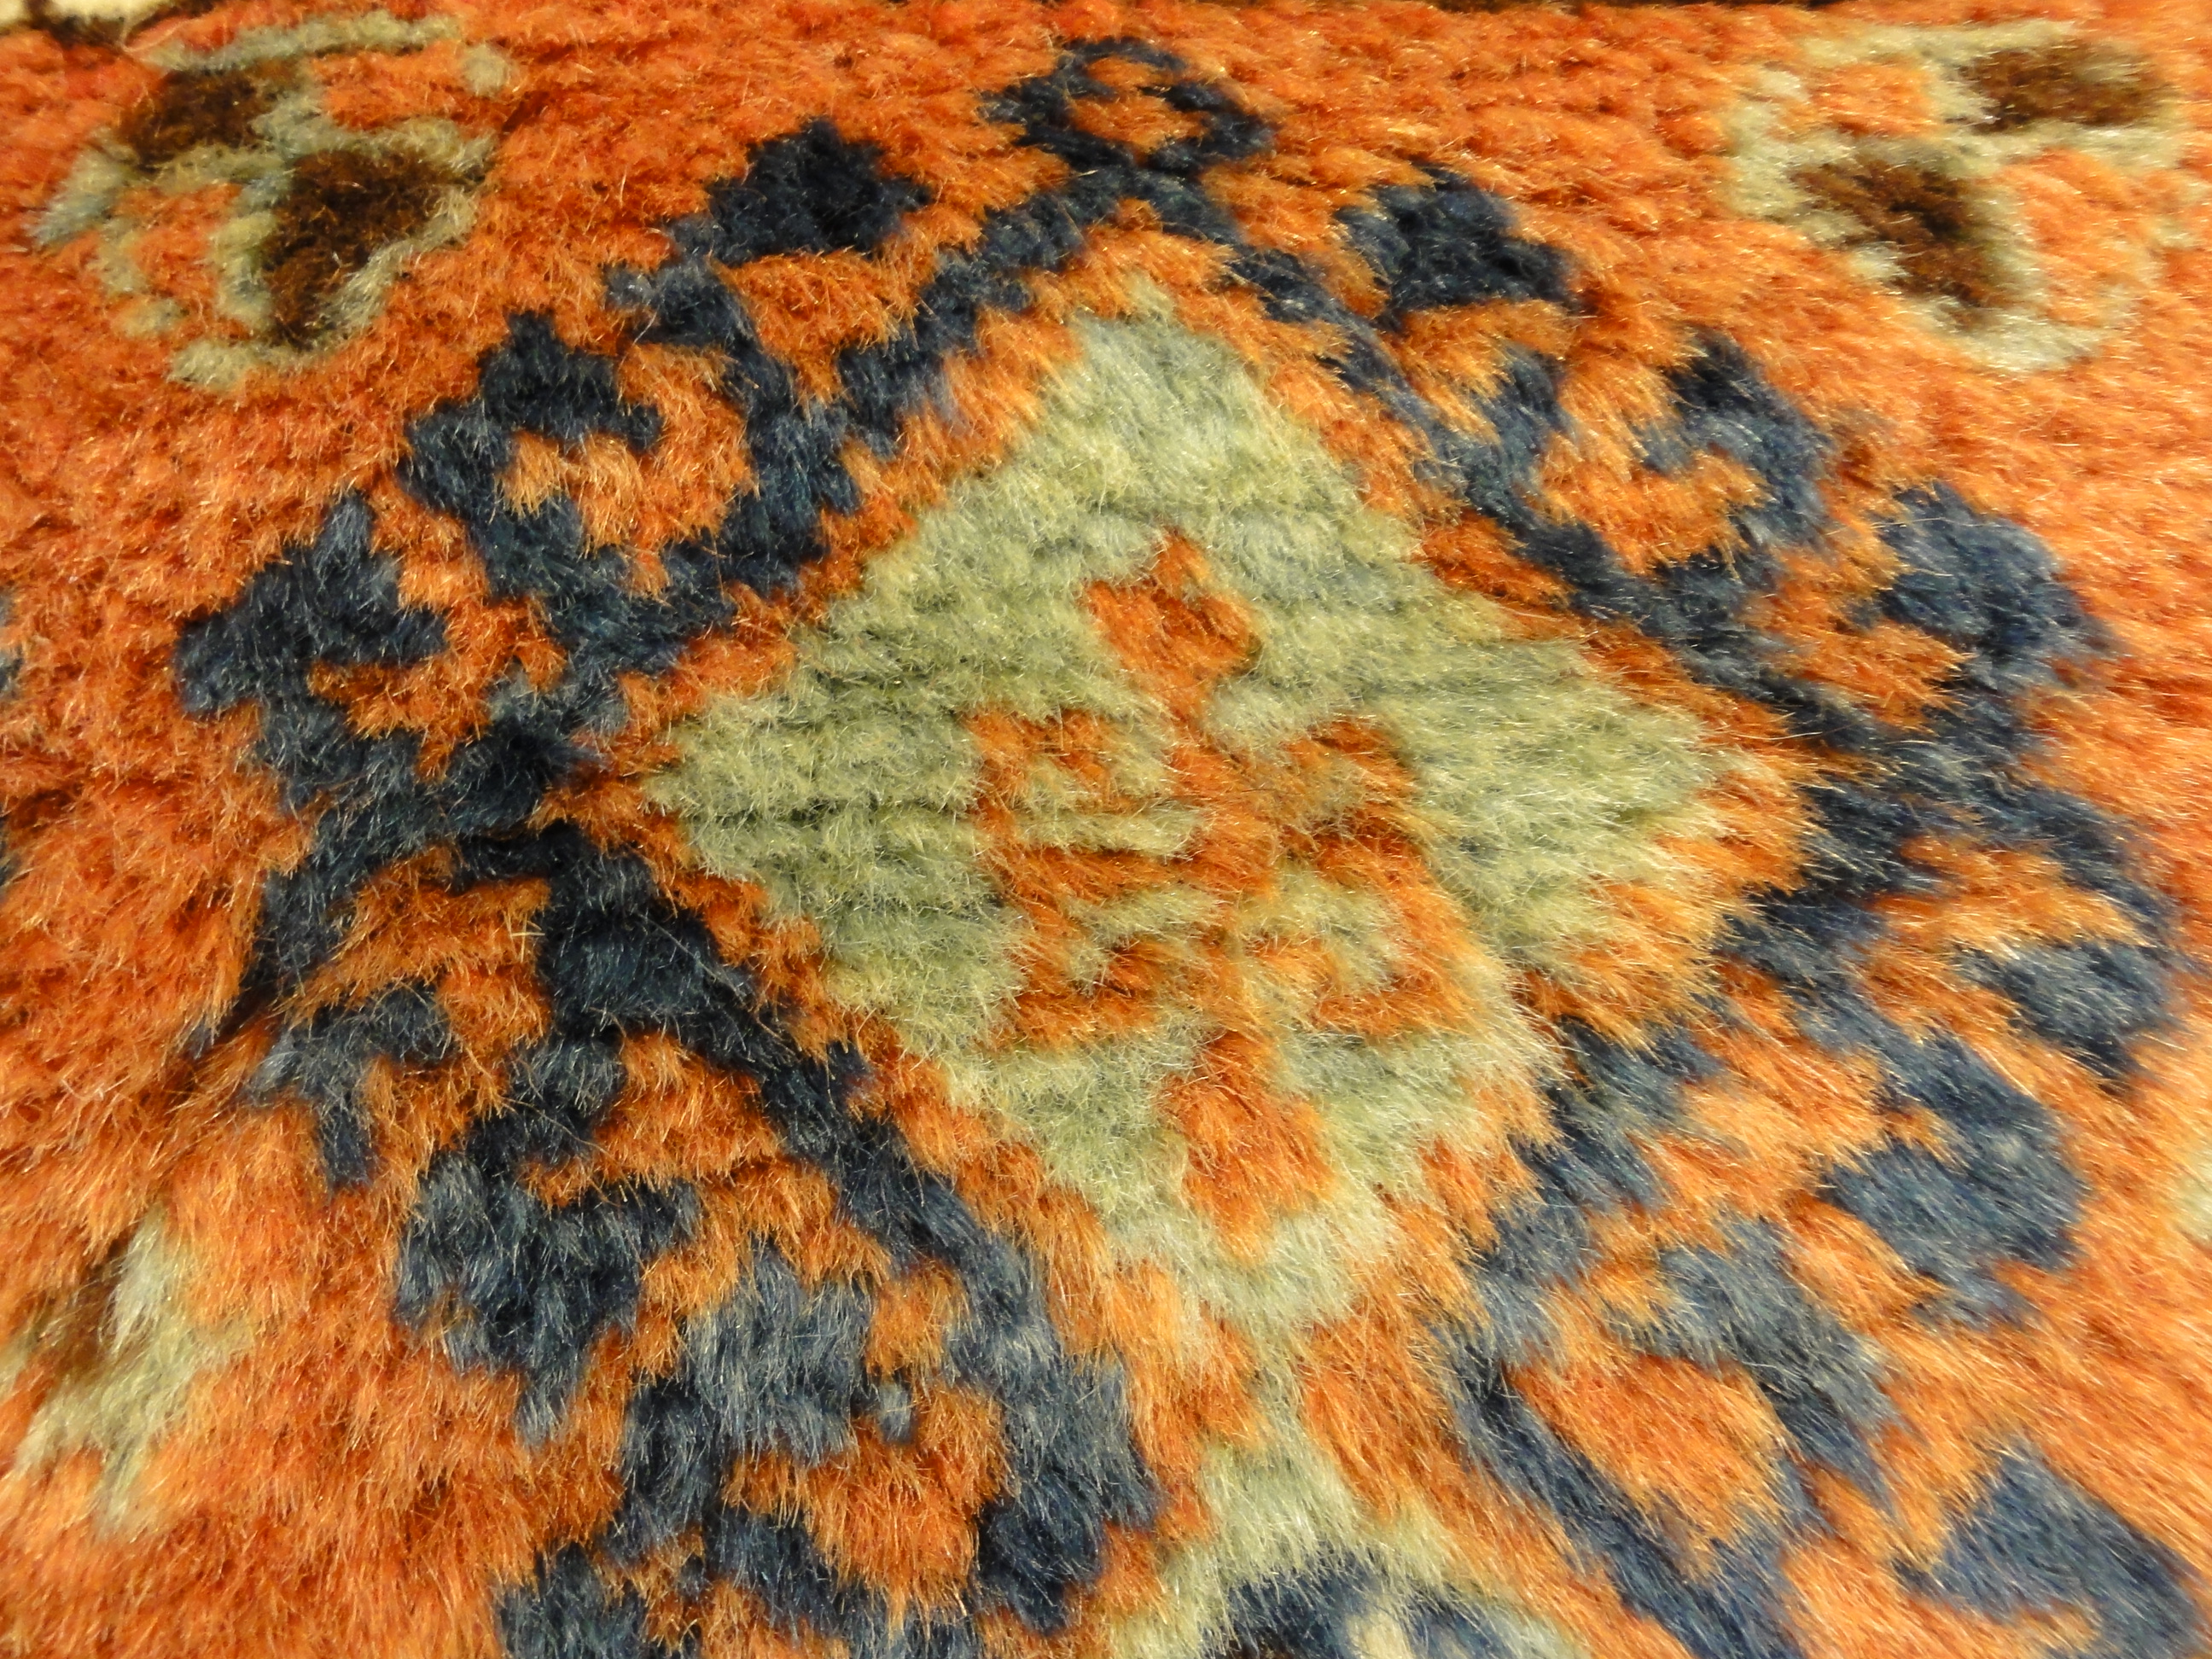 Antique Turkish Yastik ca 1900. A piece of genuine woven carpet art sold at Santa Barbara Design Center, Rugs and More in Santa Barbara, California.